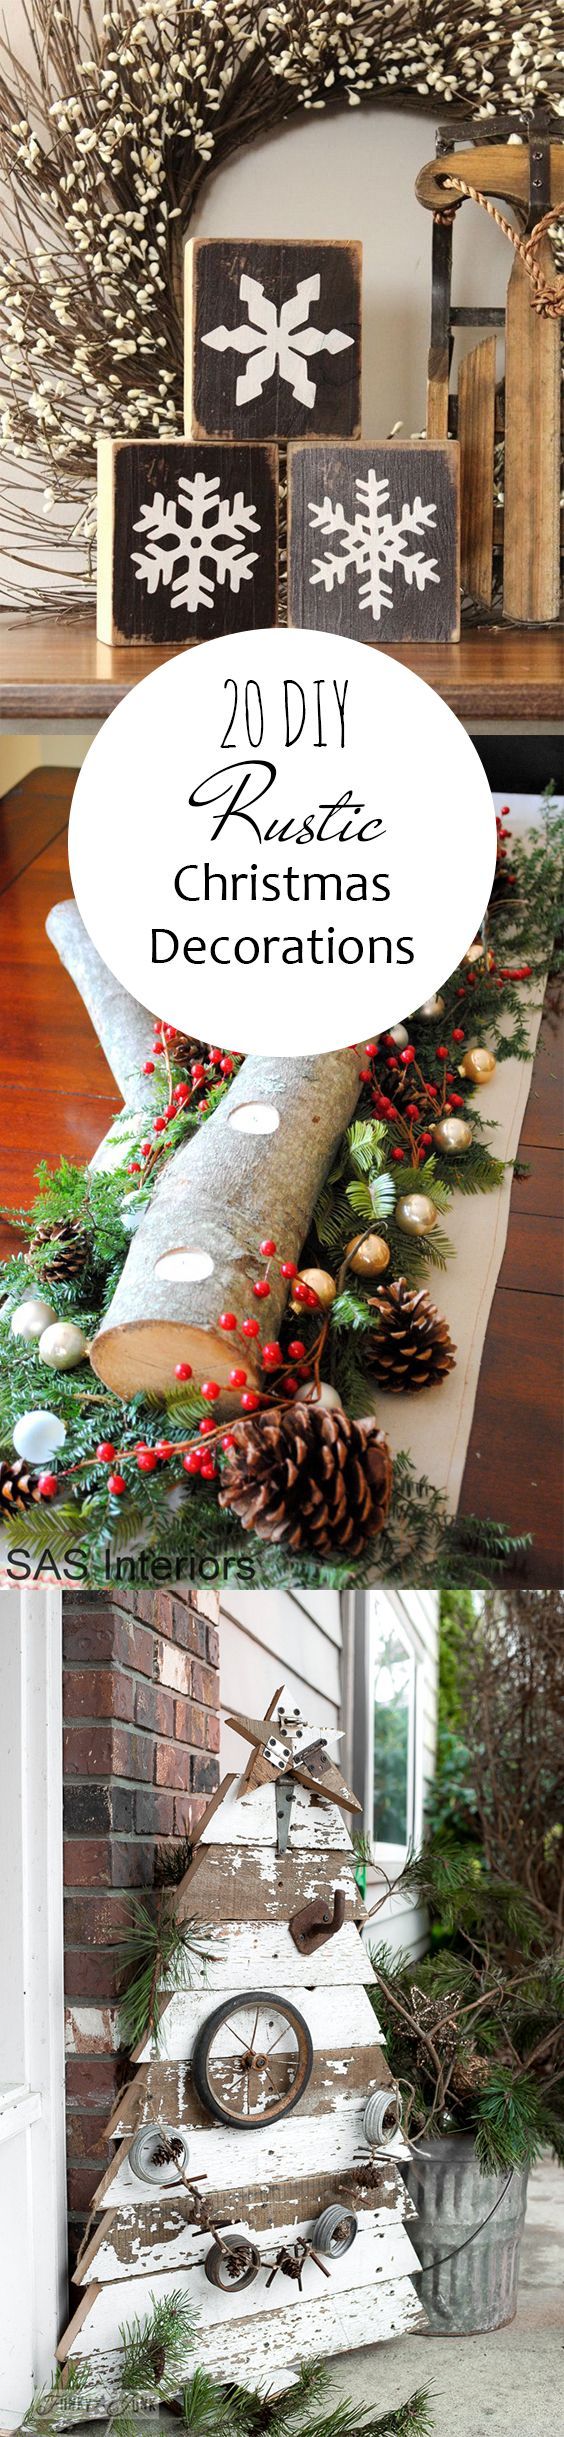 pin-20-diy-rustic-christmas-decorations